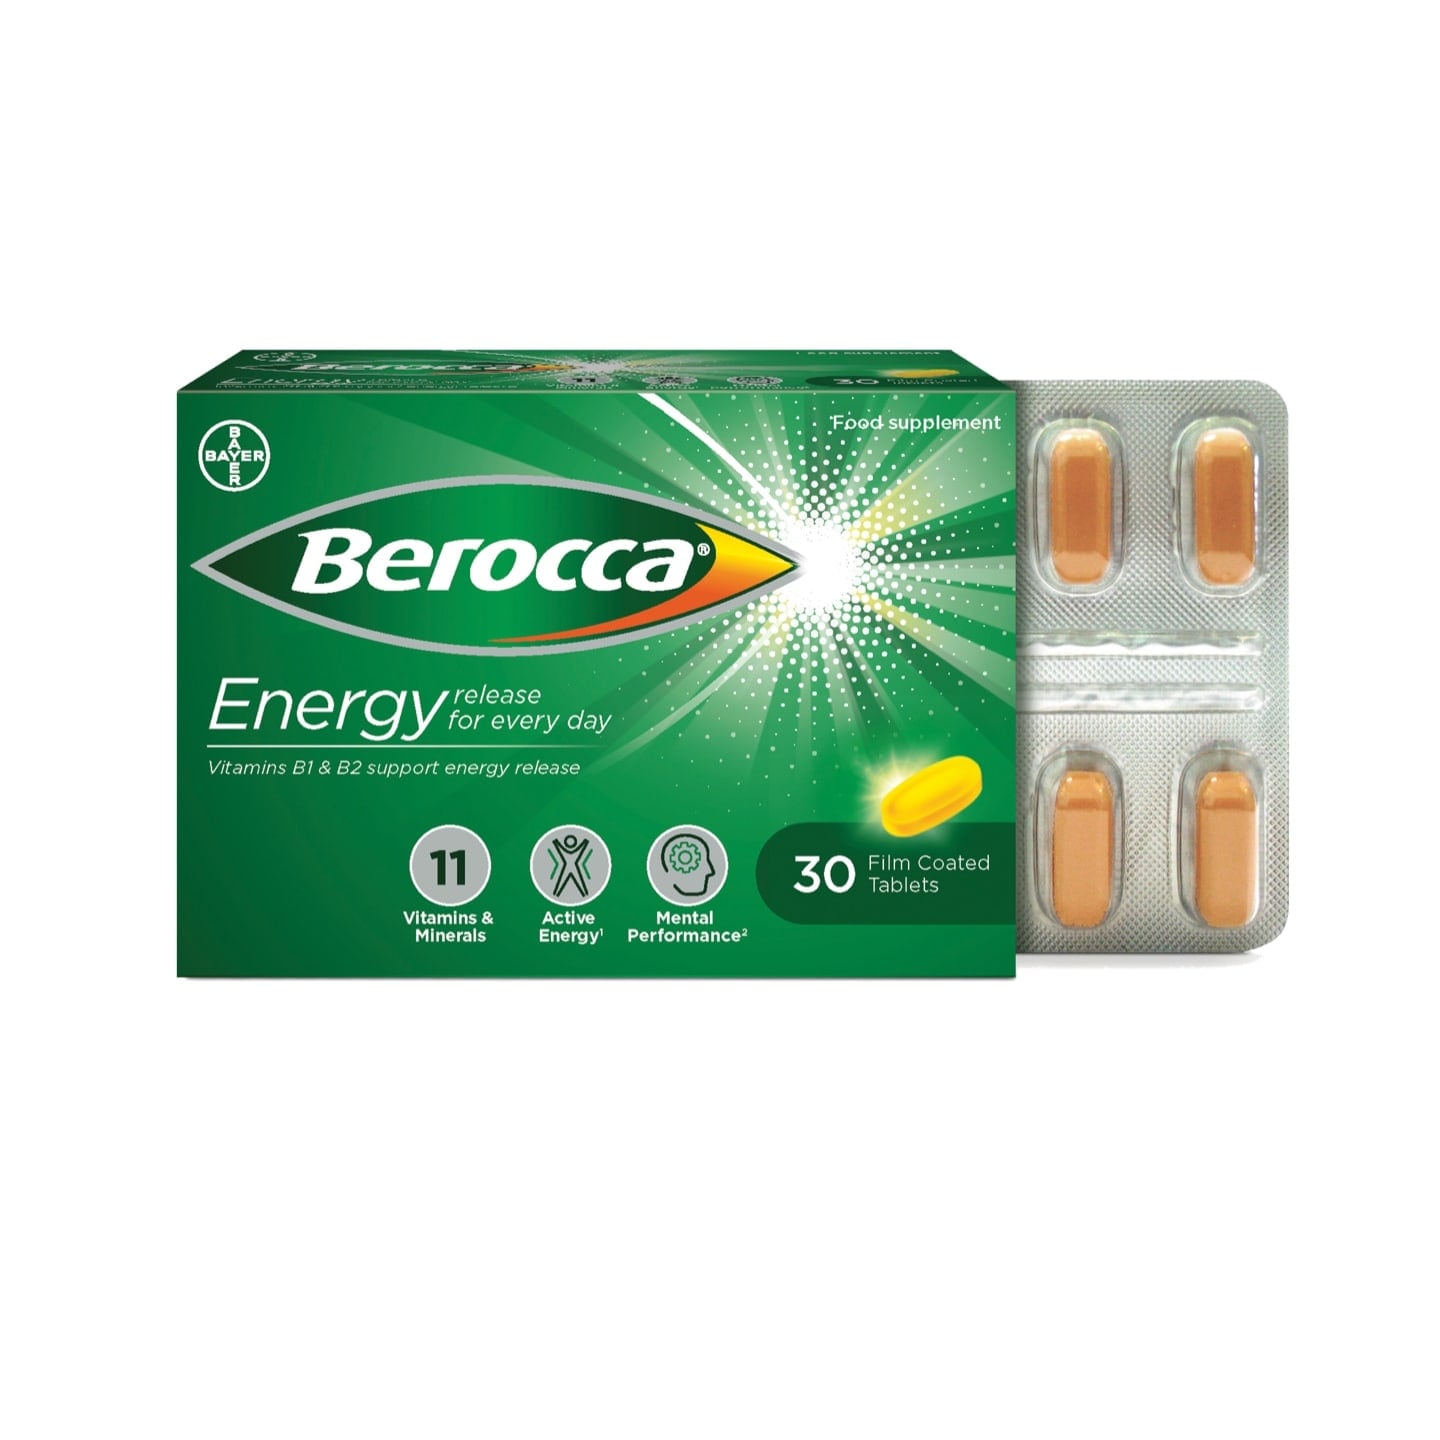 Berocca Film Coated Tablets